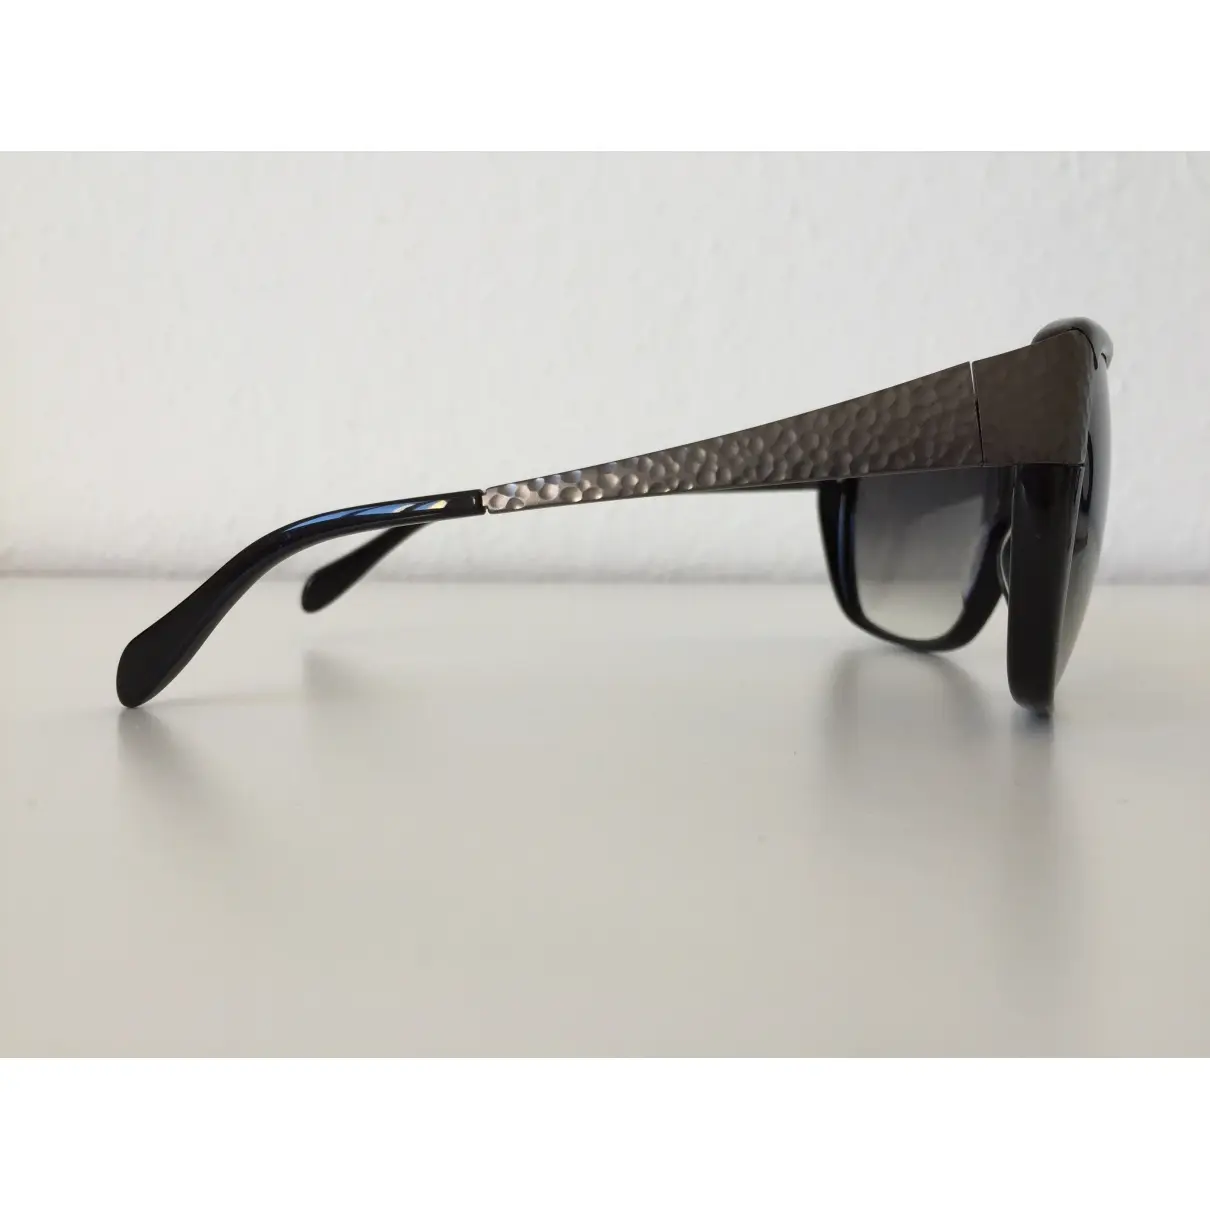 Buy Oliver Peoples Oversized sunglasses online